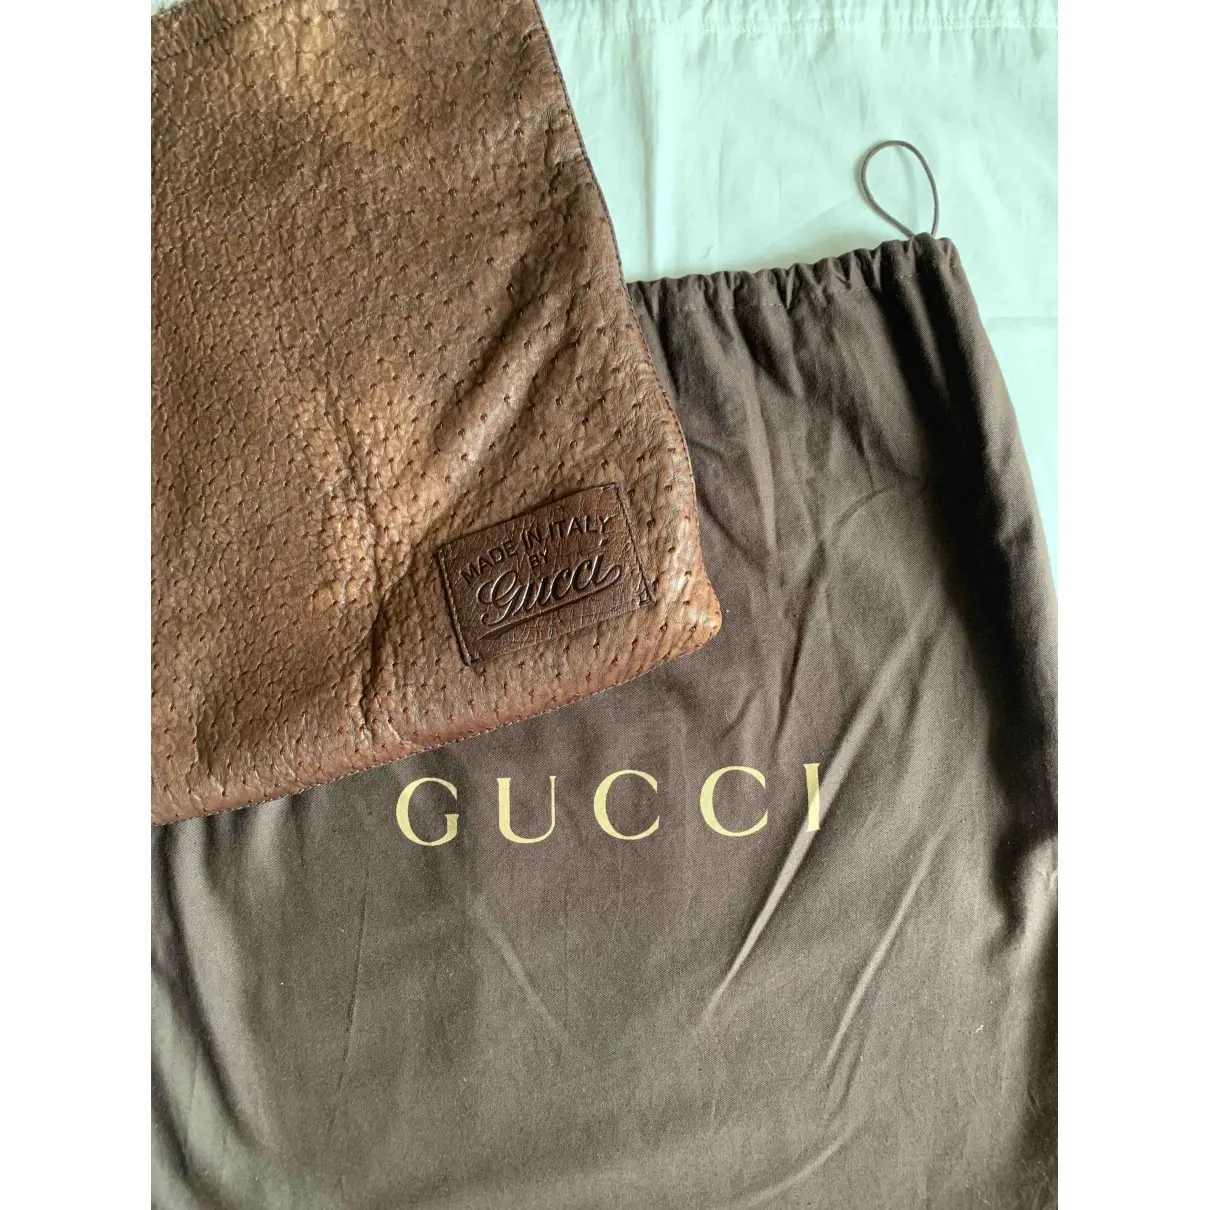 Ostrich bag Gucci - Vintage